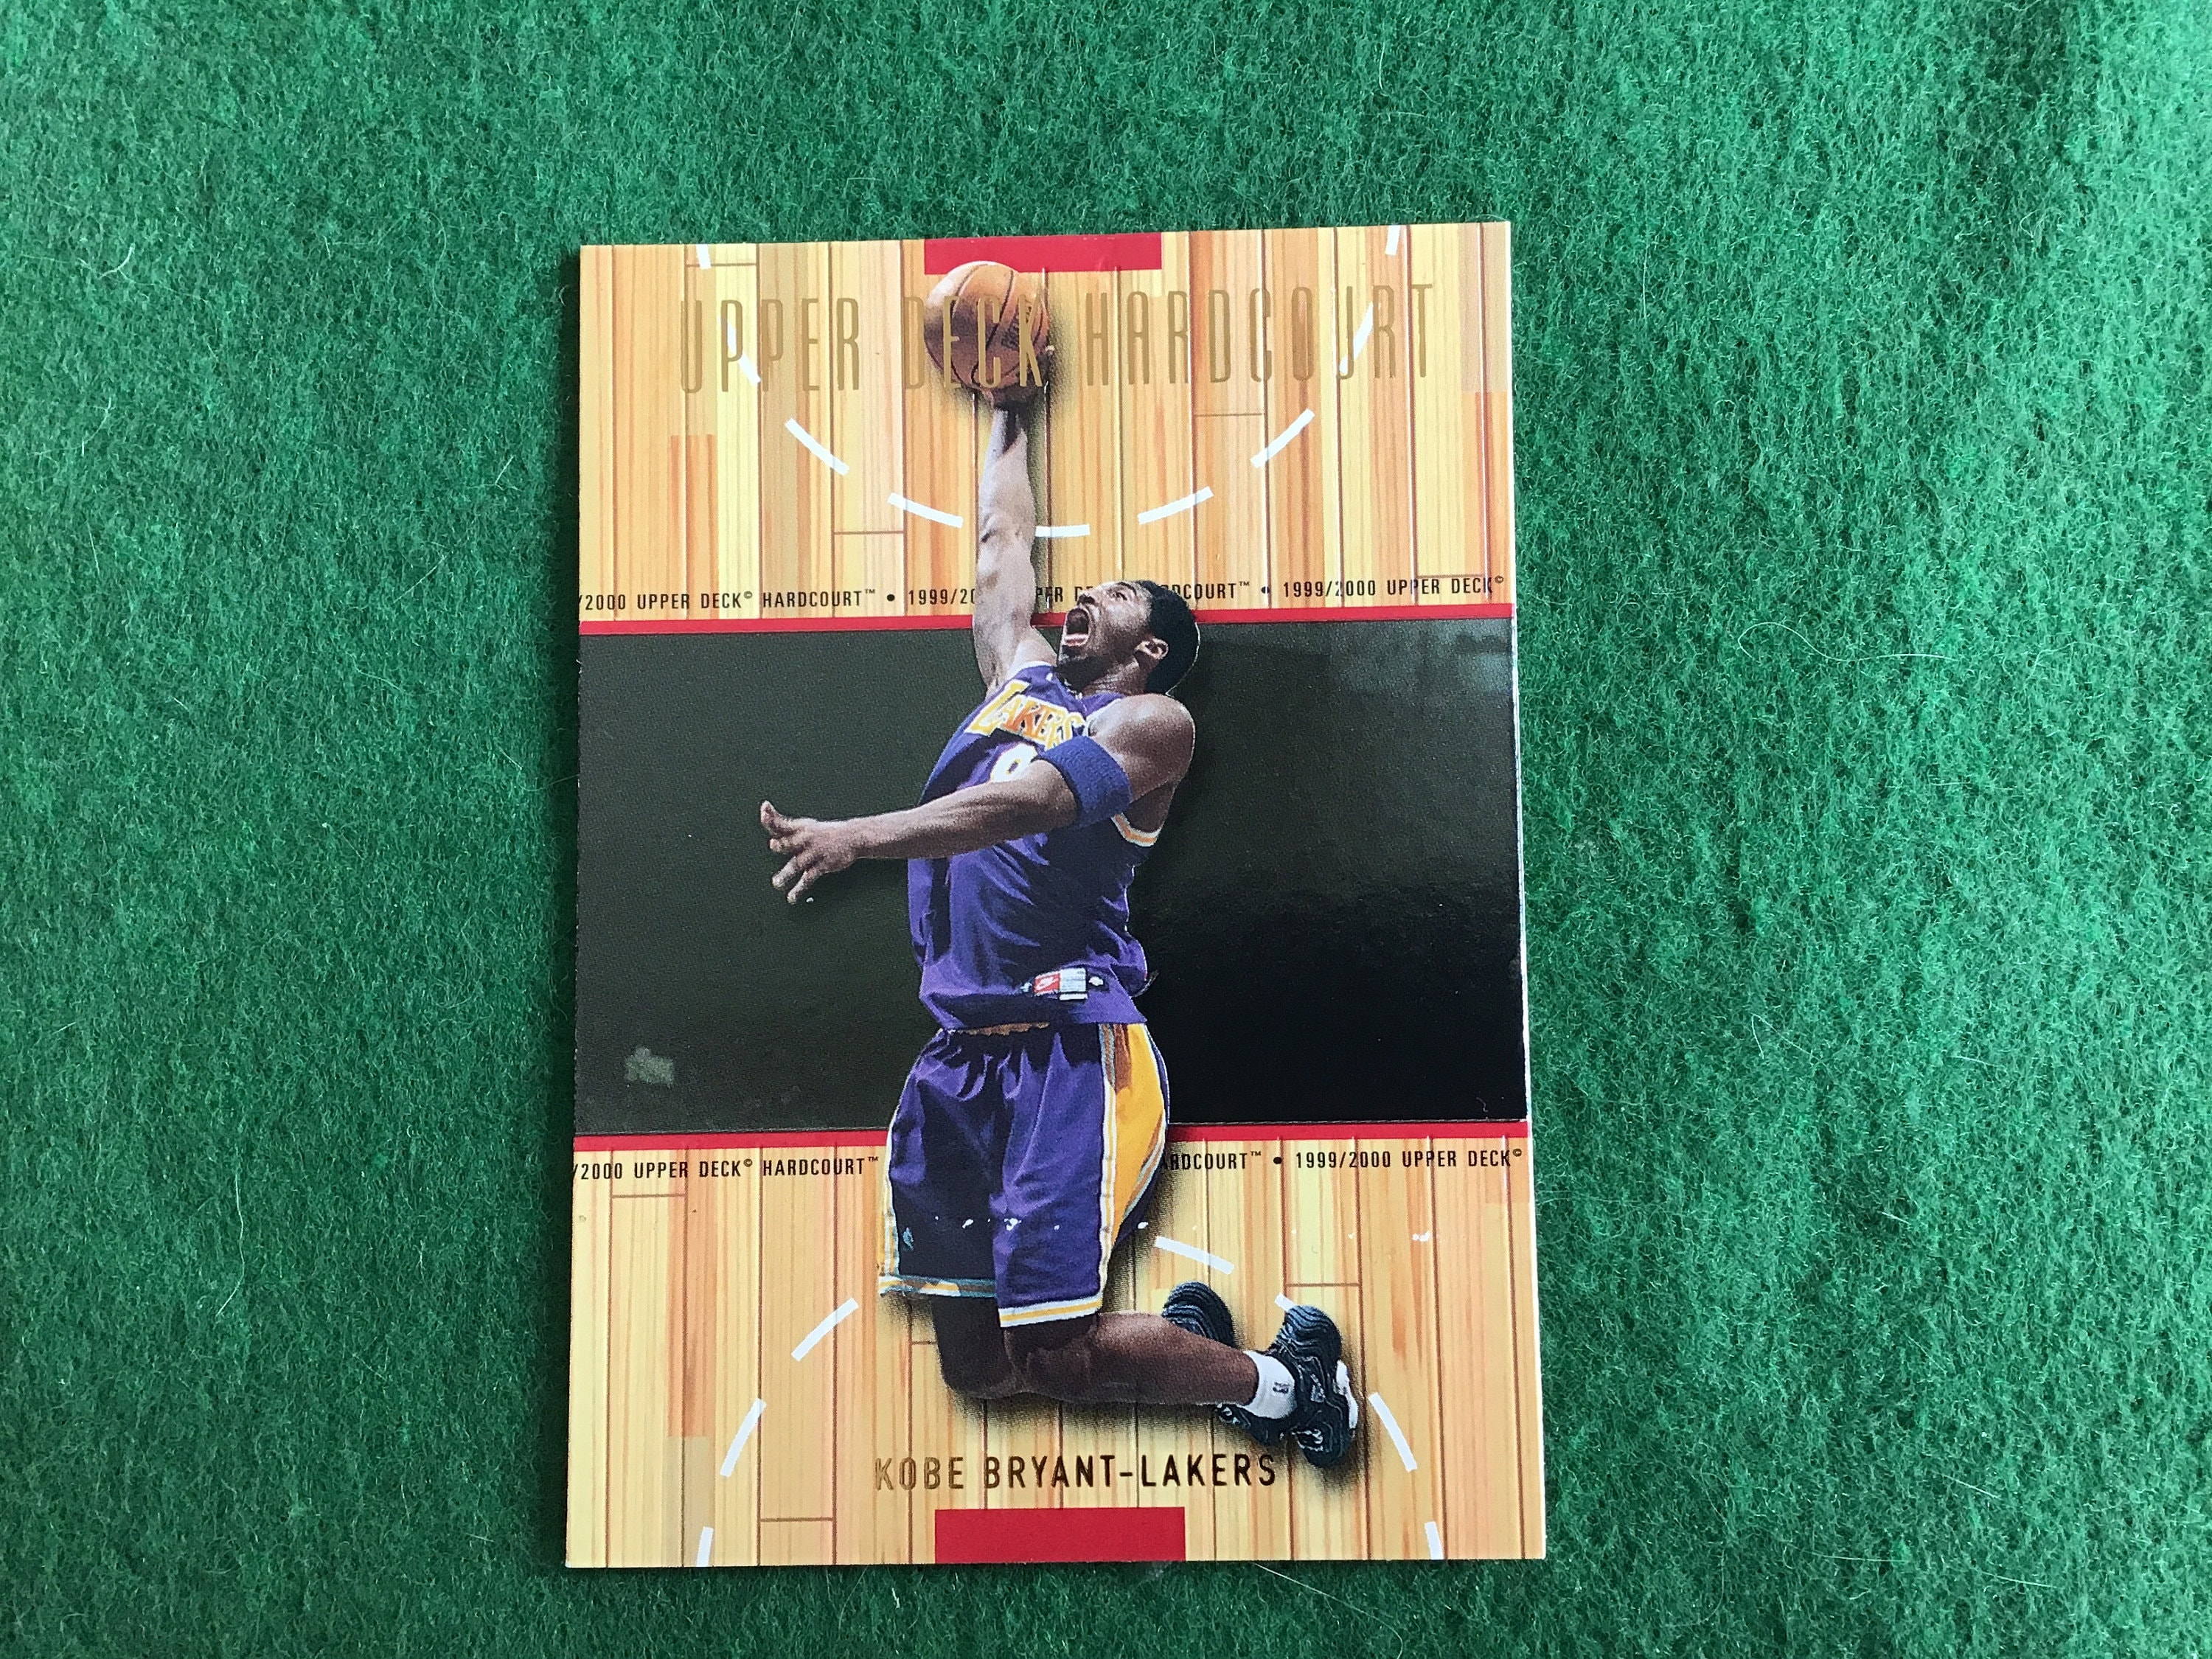 Kobe Bryant Los Angeles Lakers 1999-2000 NBA Finals Jersey - Rare